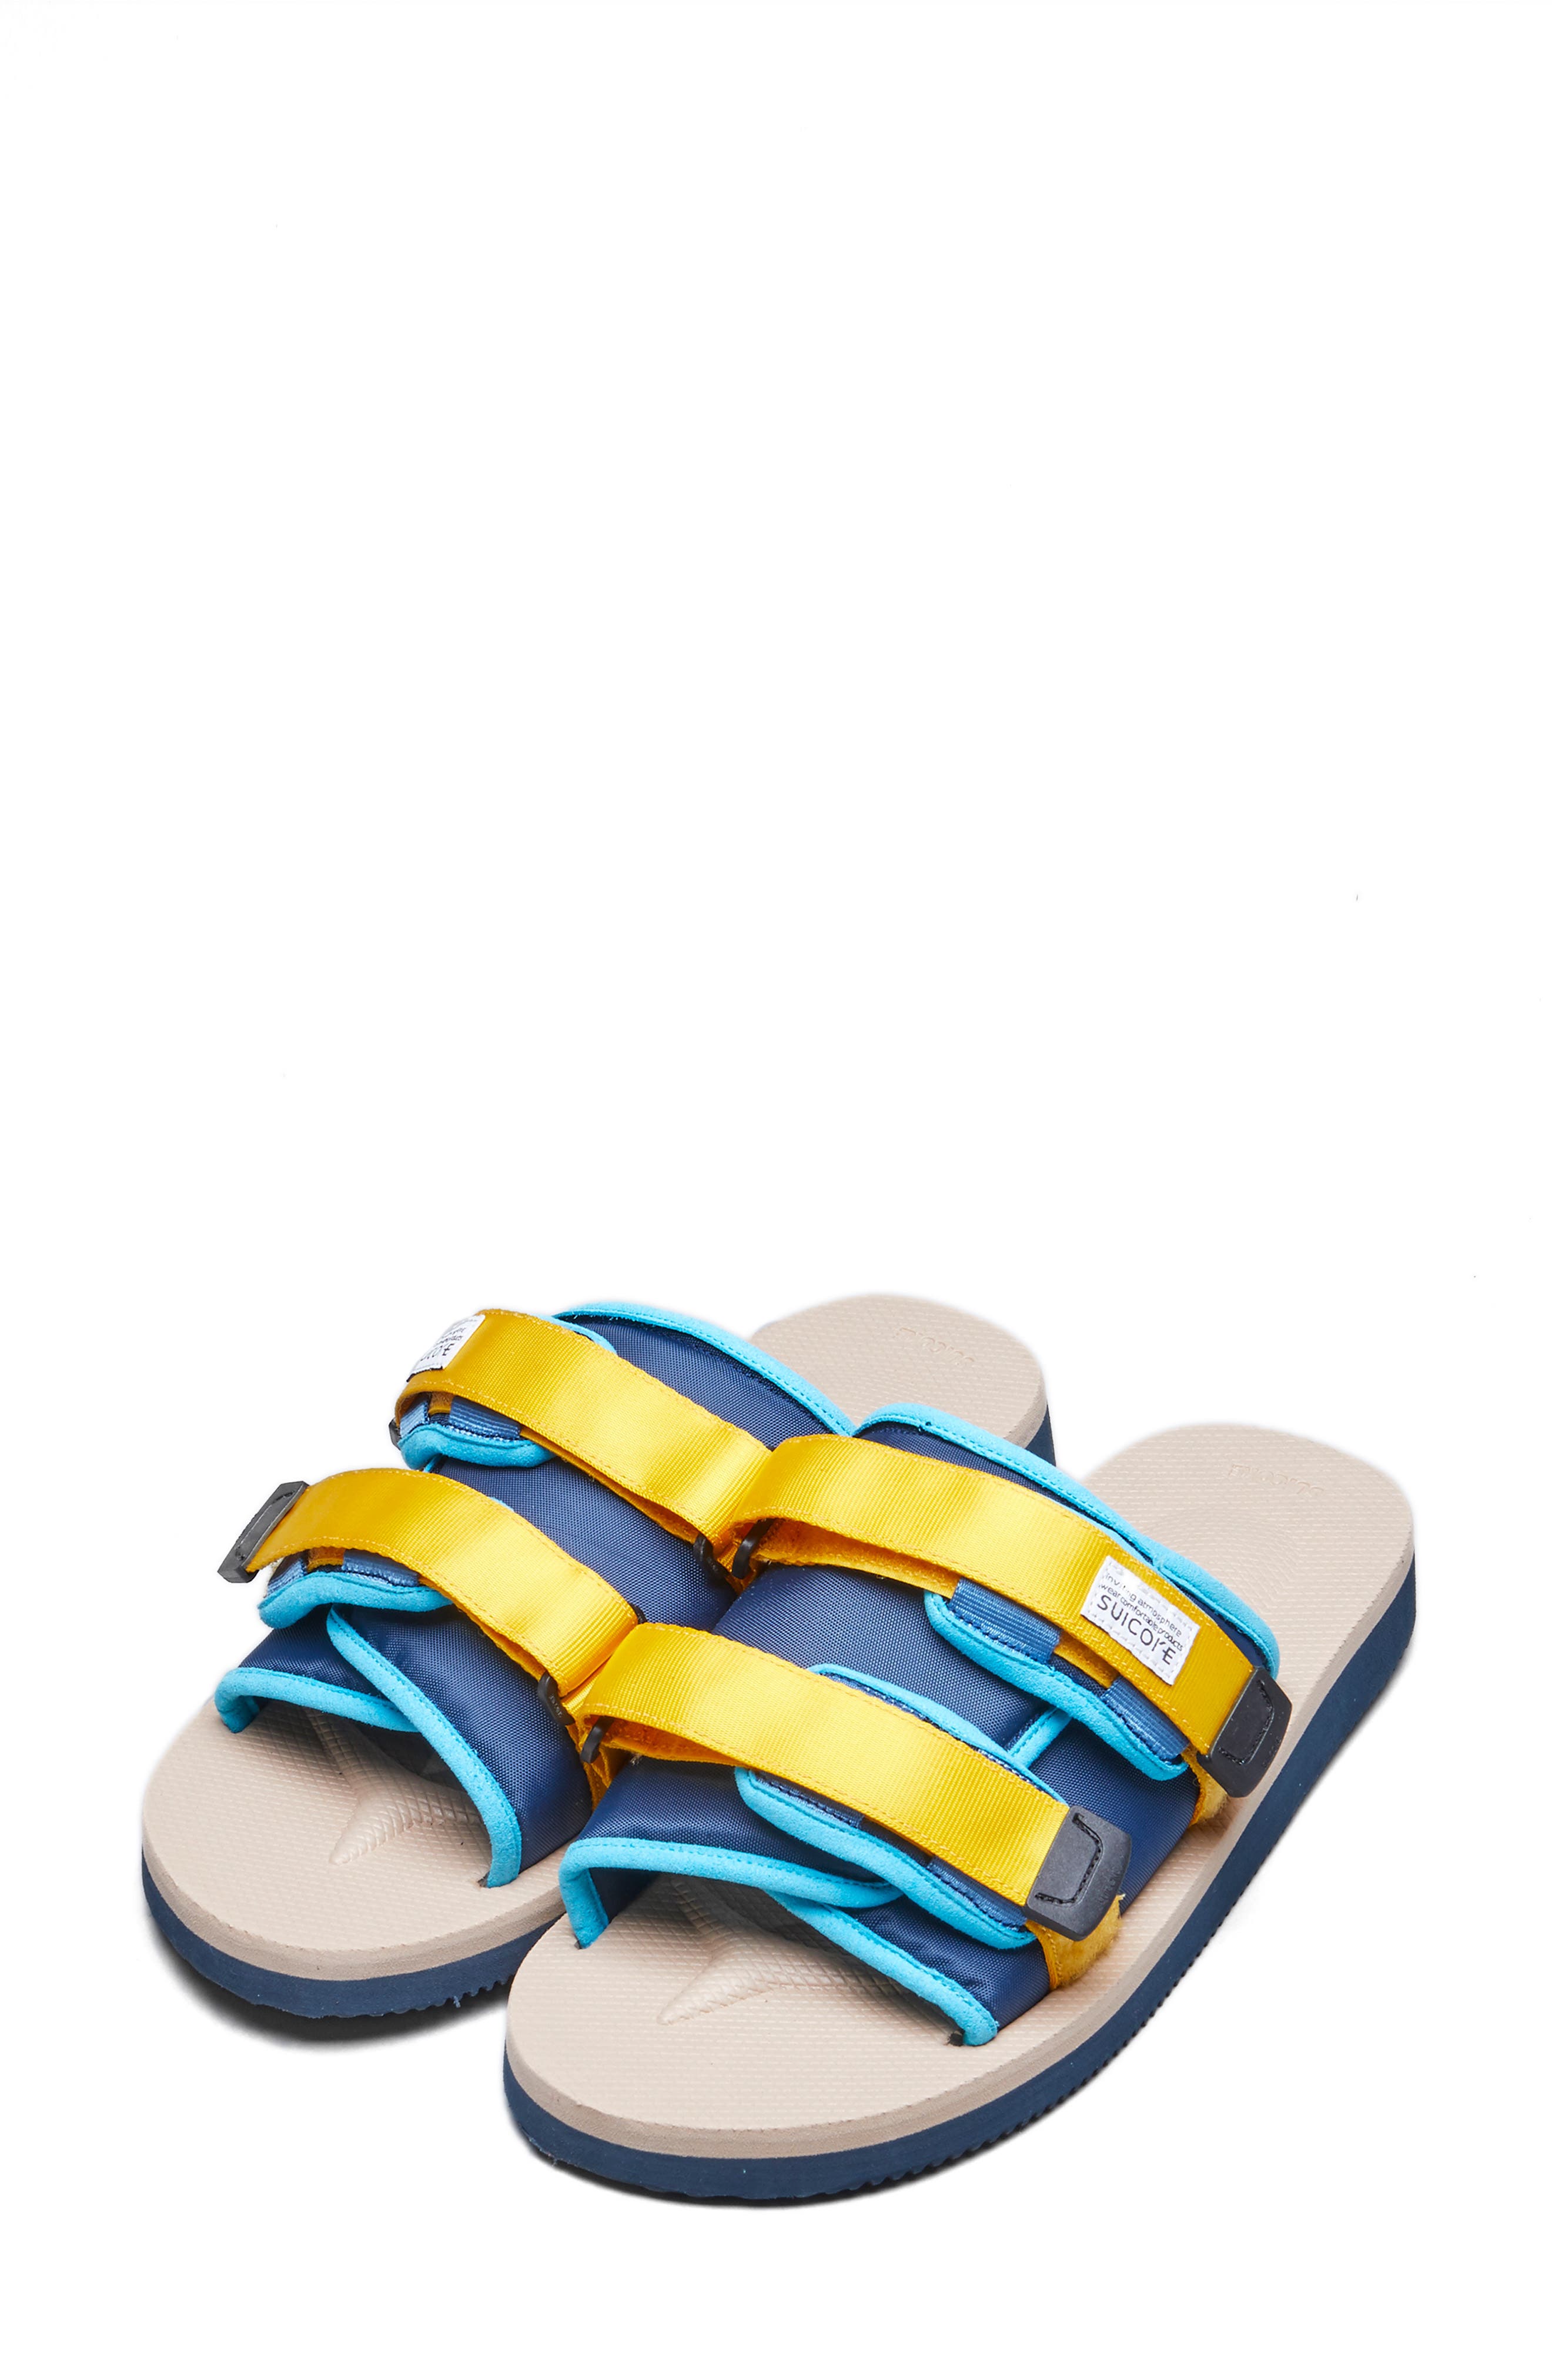 suicoke urich slide sandal